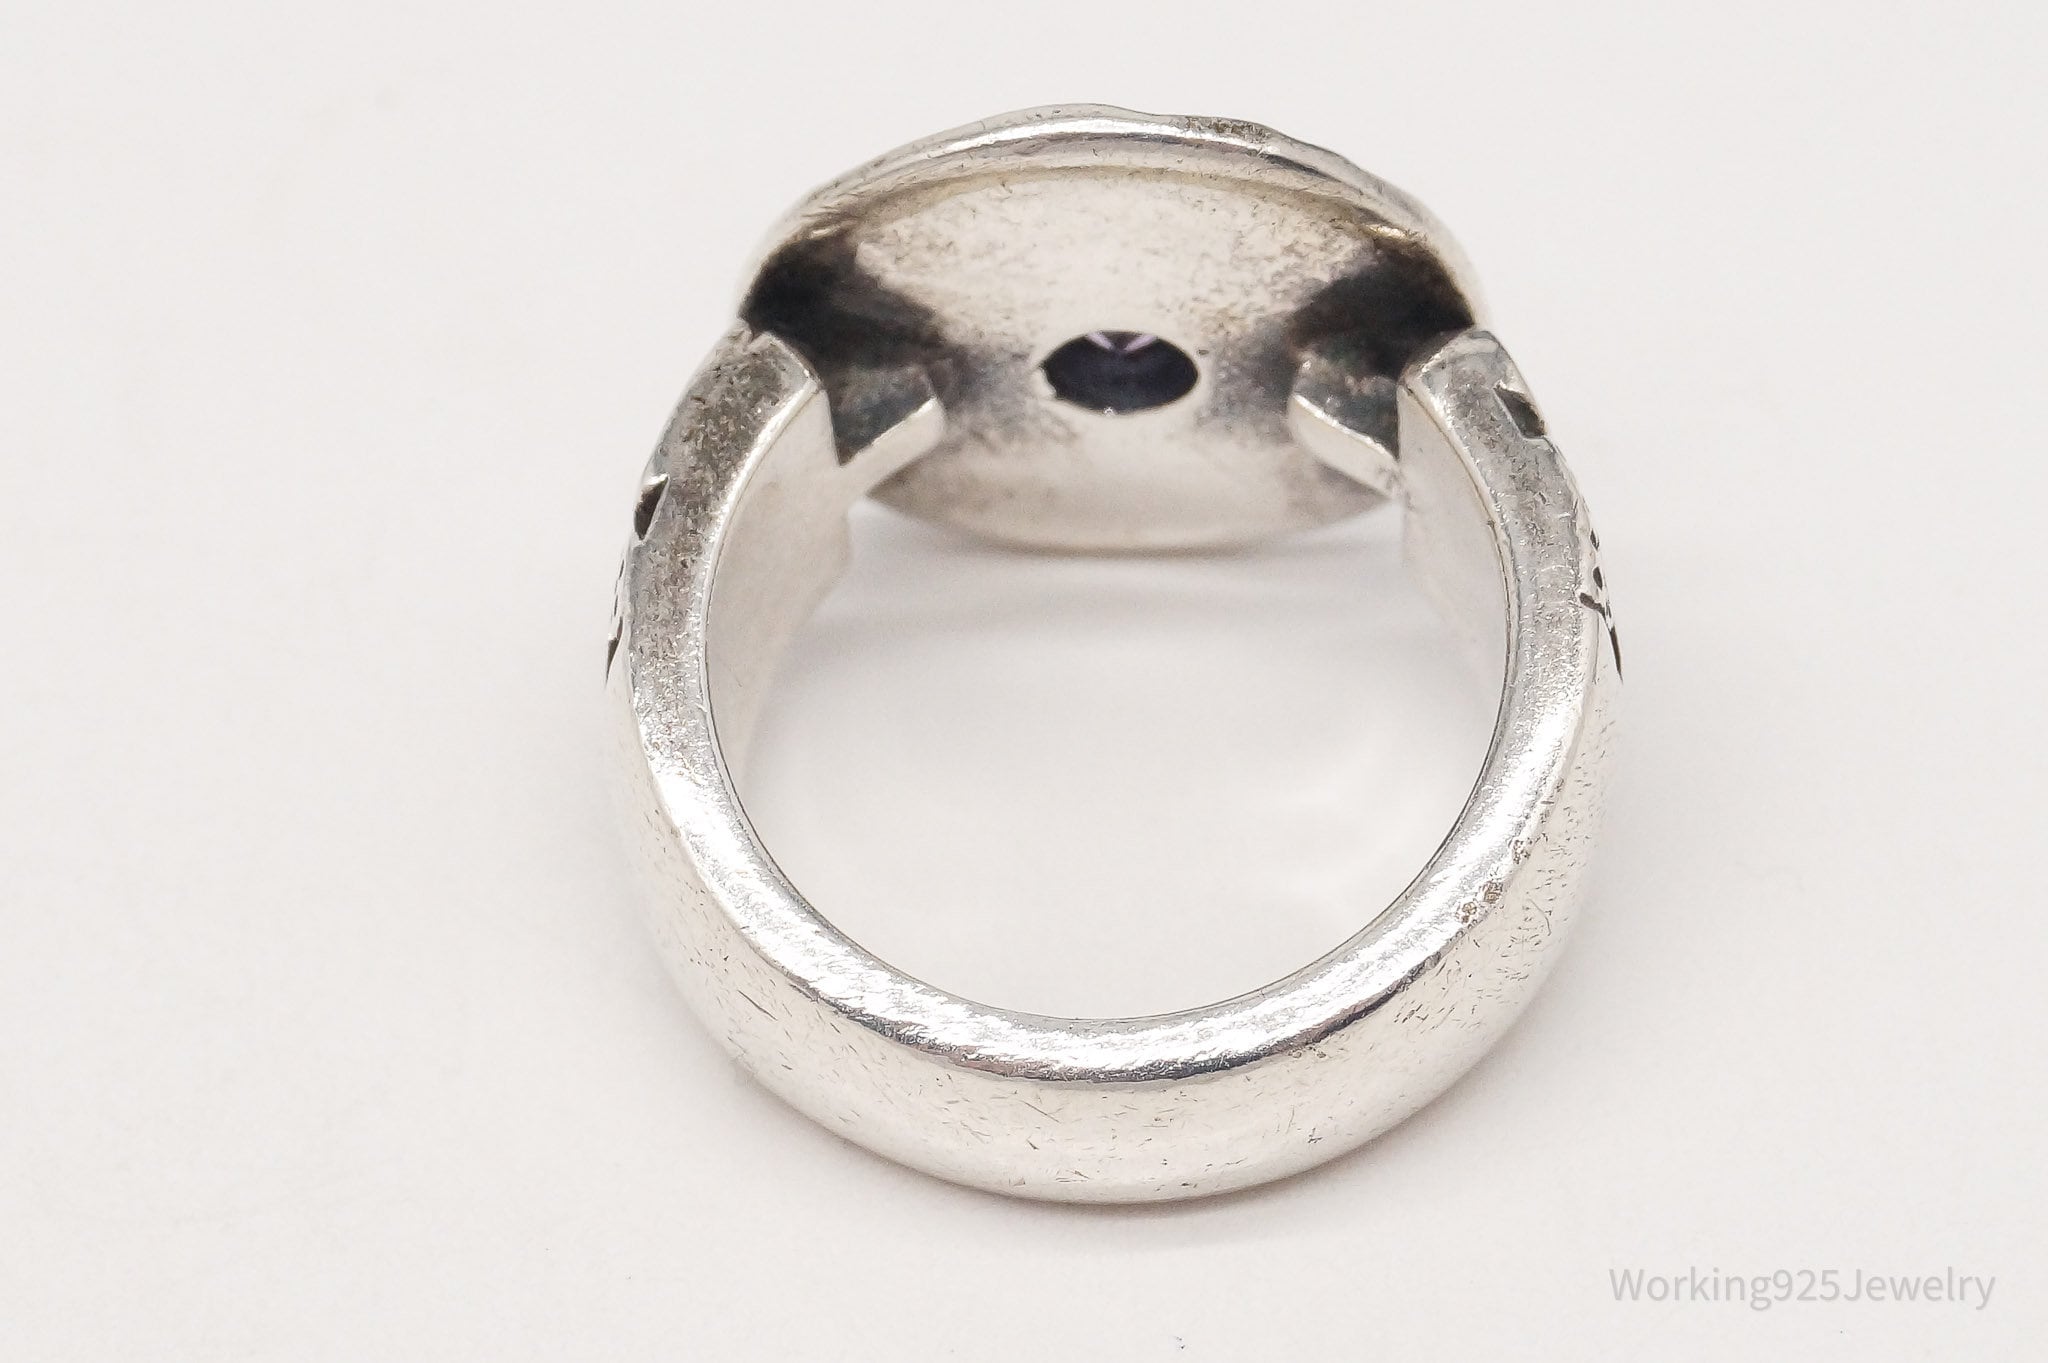 Vintage Ripple Medallion Amethyst Sterling Silver Ring - Size 5.25